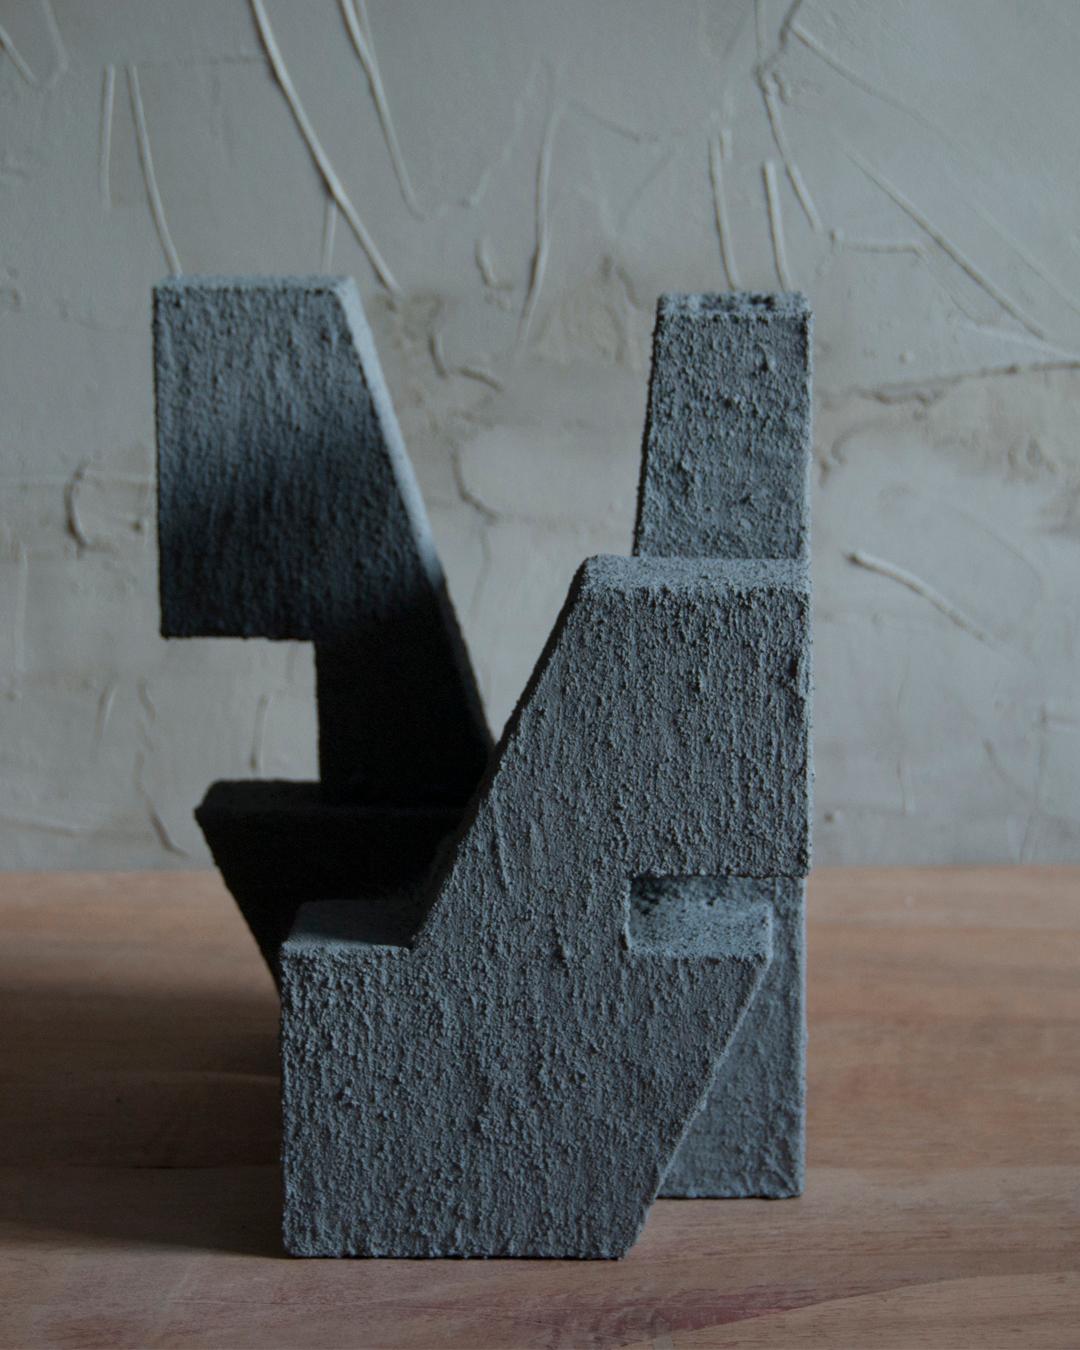 Spanish Sculpture Contemporary Geometric Constructivist Wood Concrete Grey- The Ship For Sale